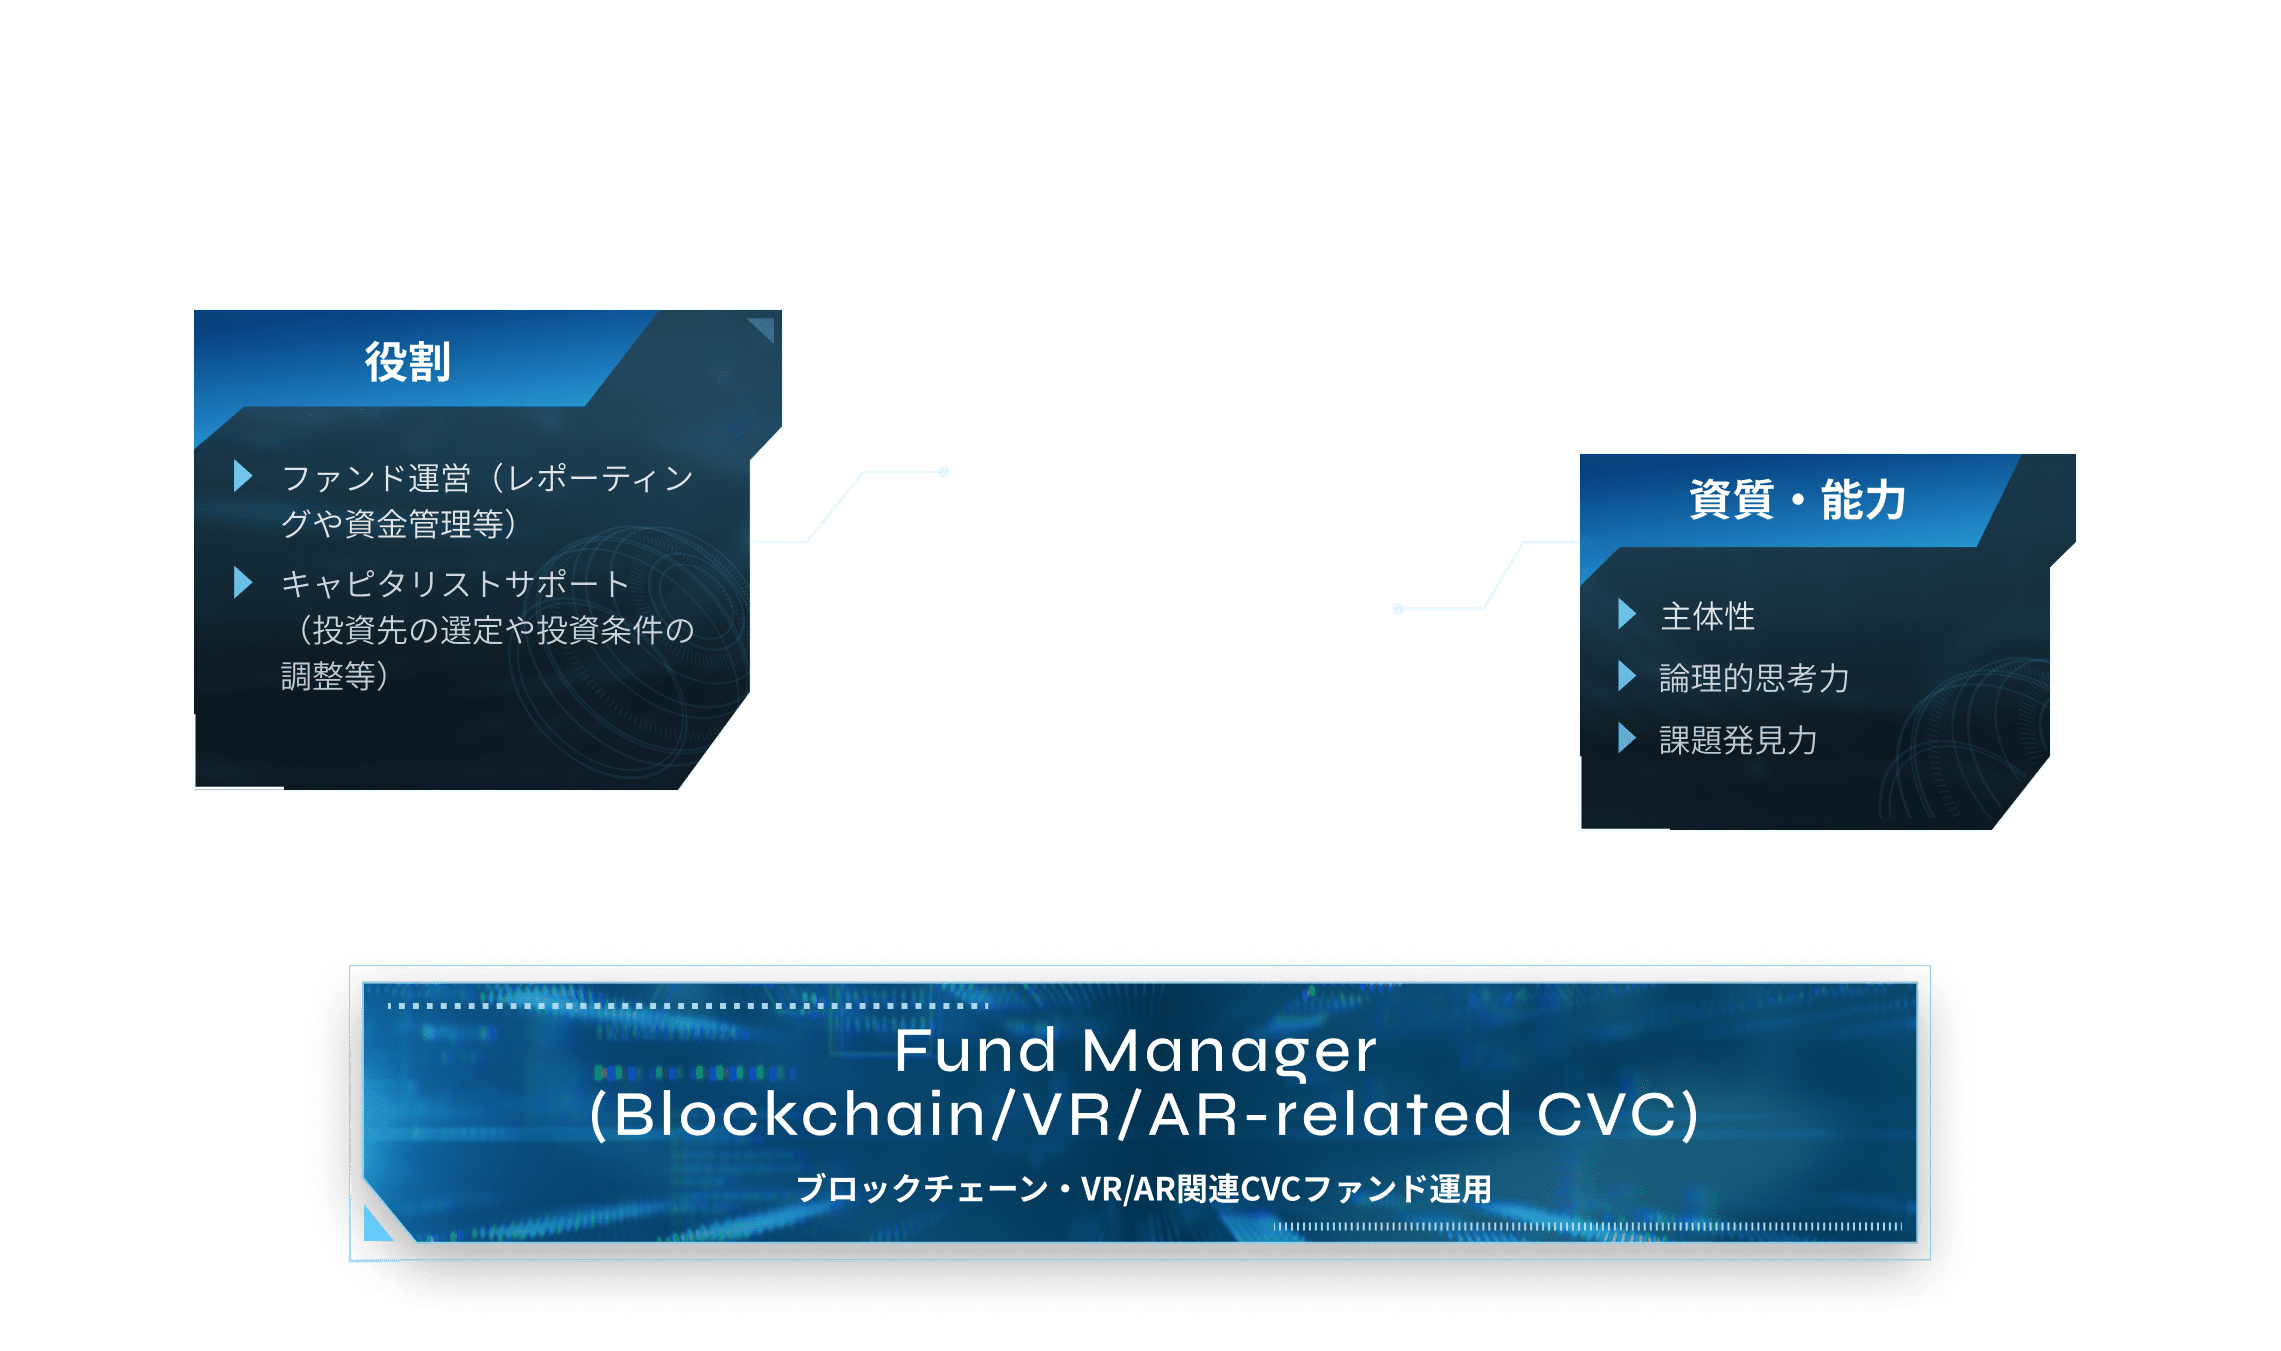 Fund Manager (Blockchain/VR/AR-related CVC)